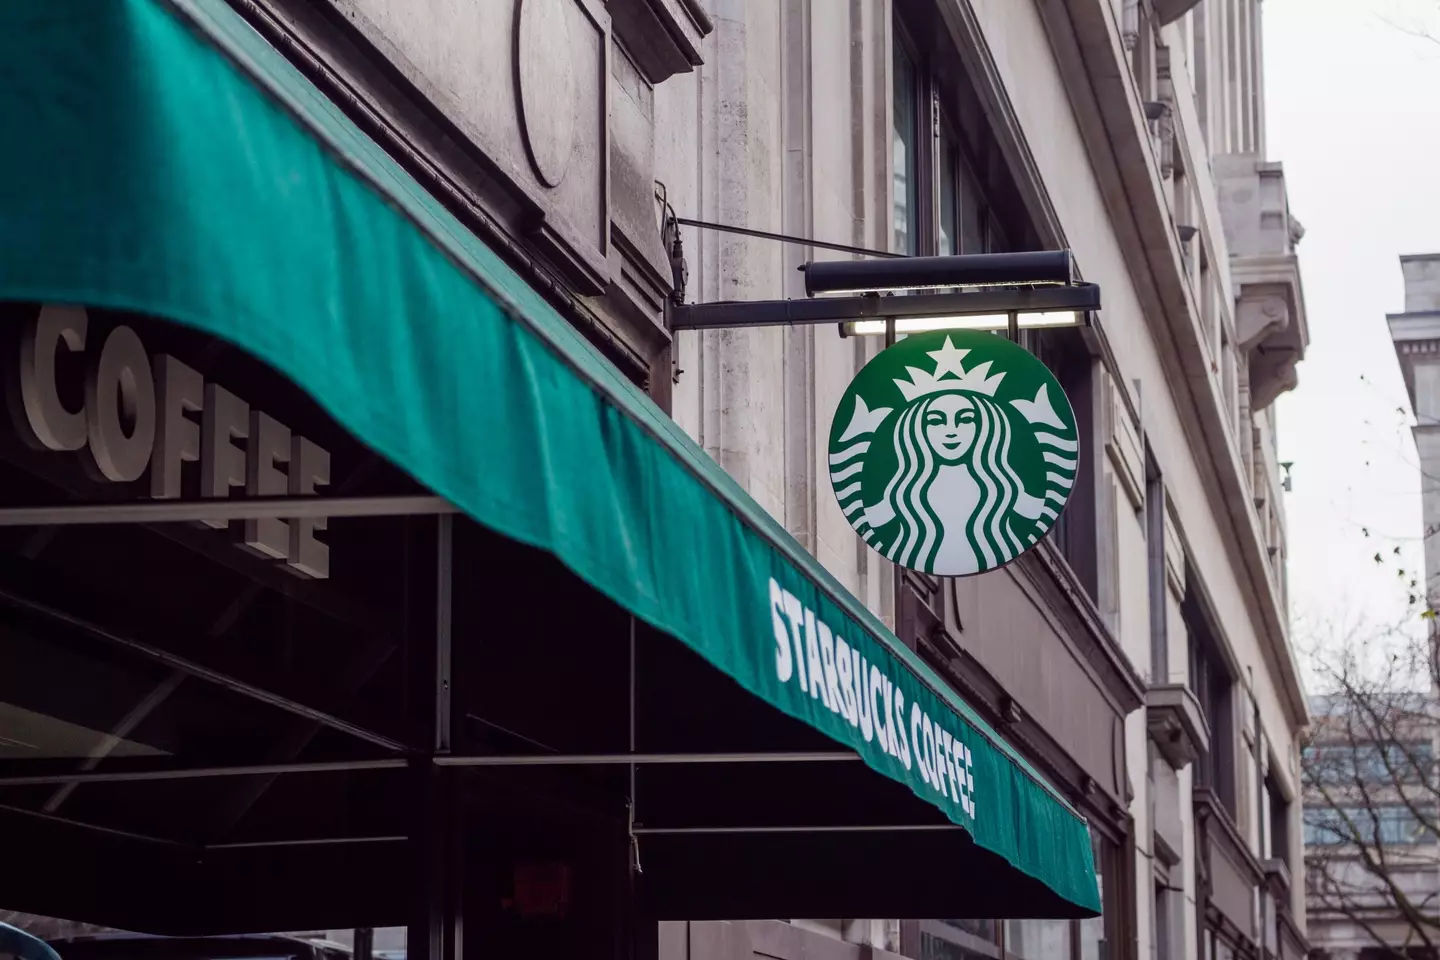 The Starbucks worker has been praised online.